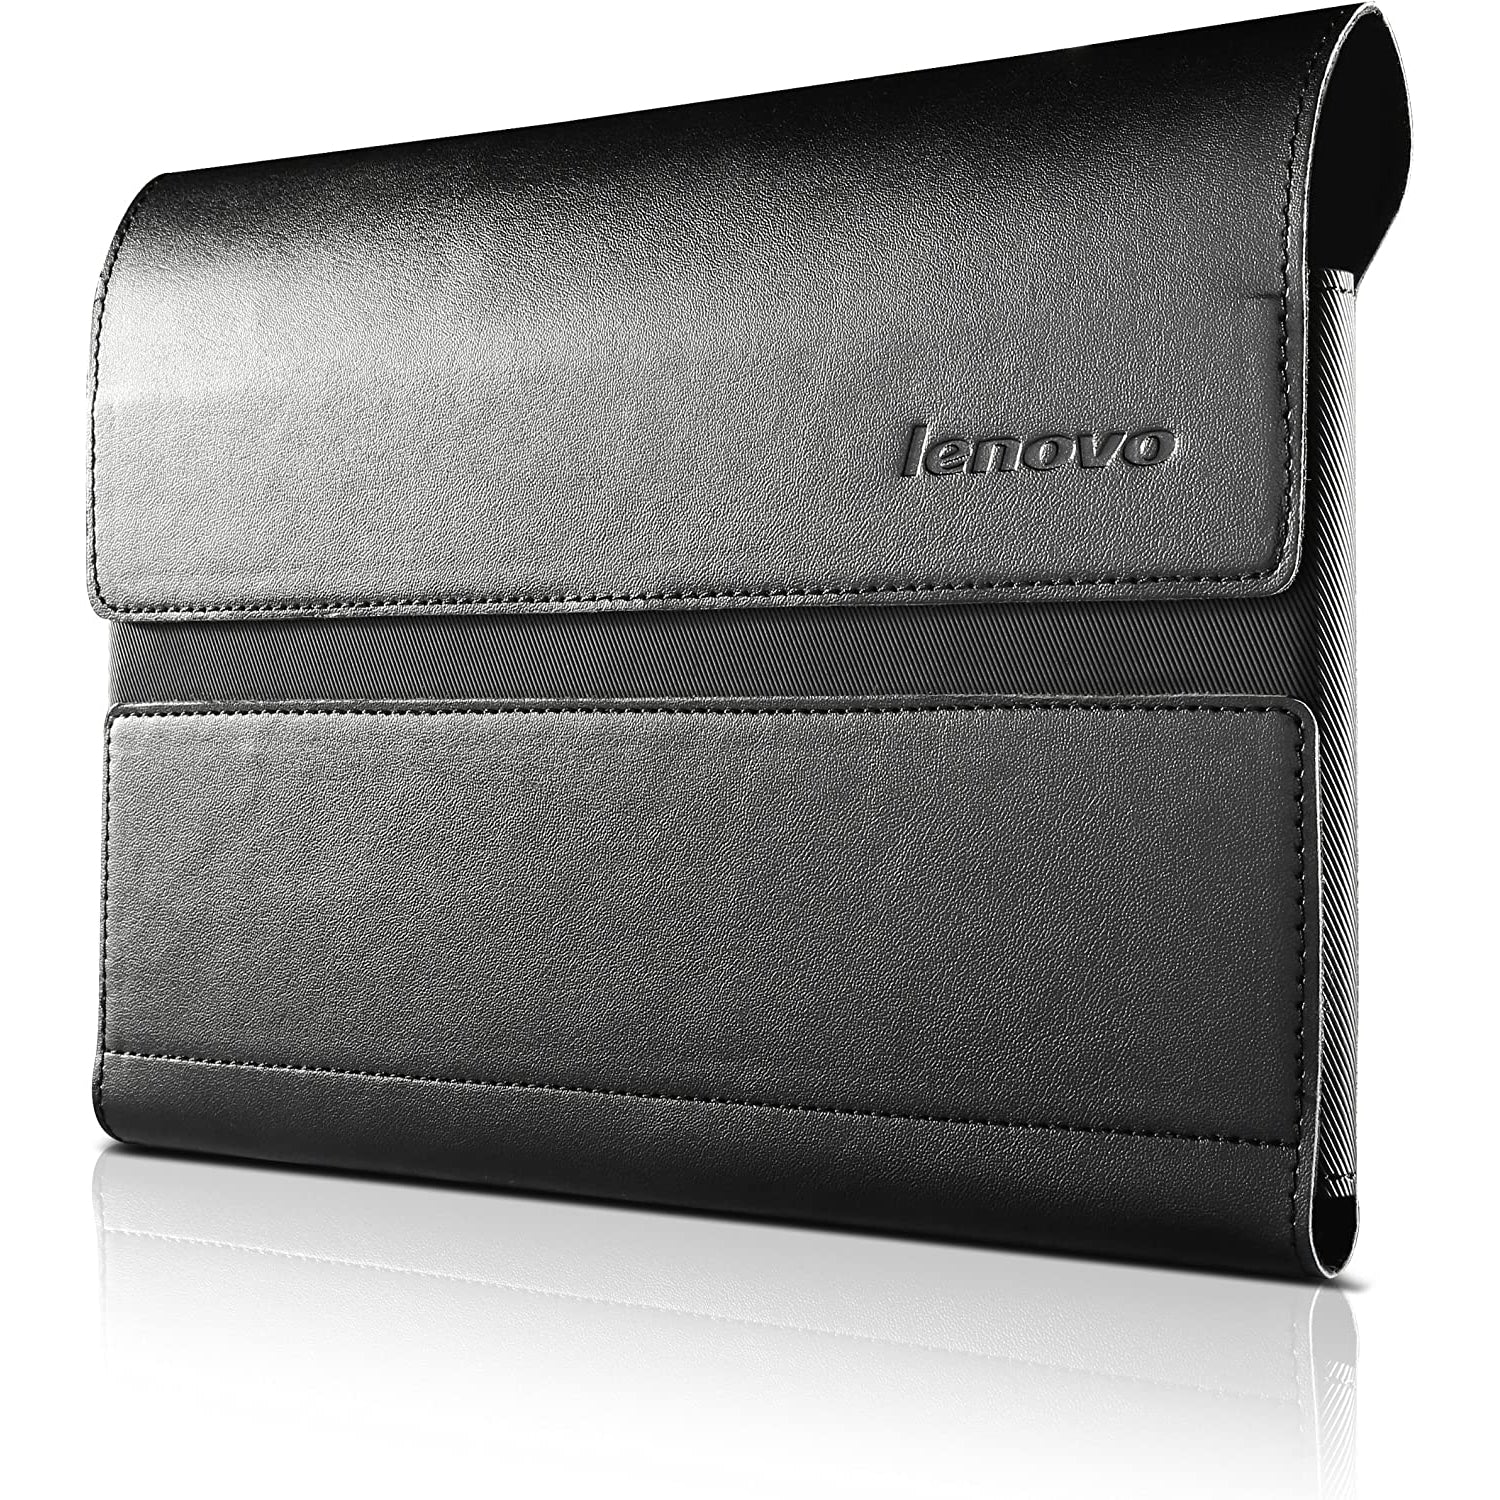 Lenovo Sleeve and Film for 8 inch Yoga Tablet - Black - Refurbished Excellent